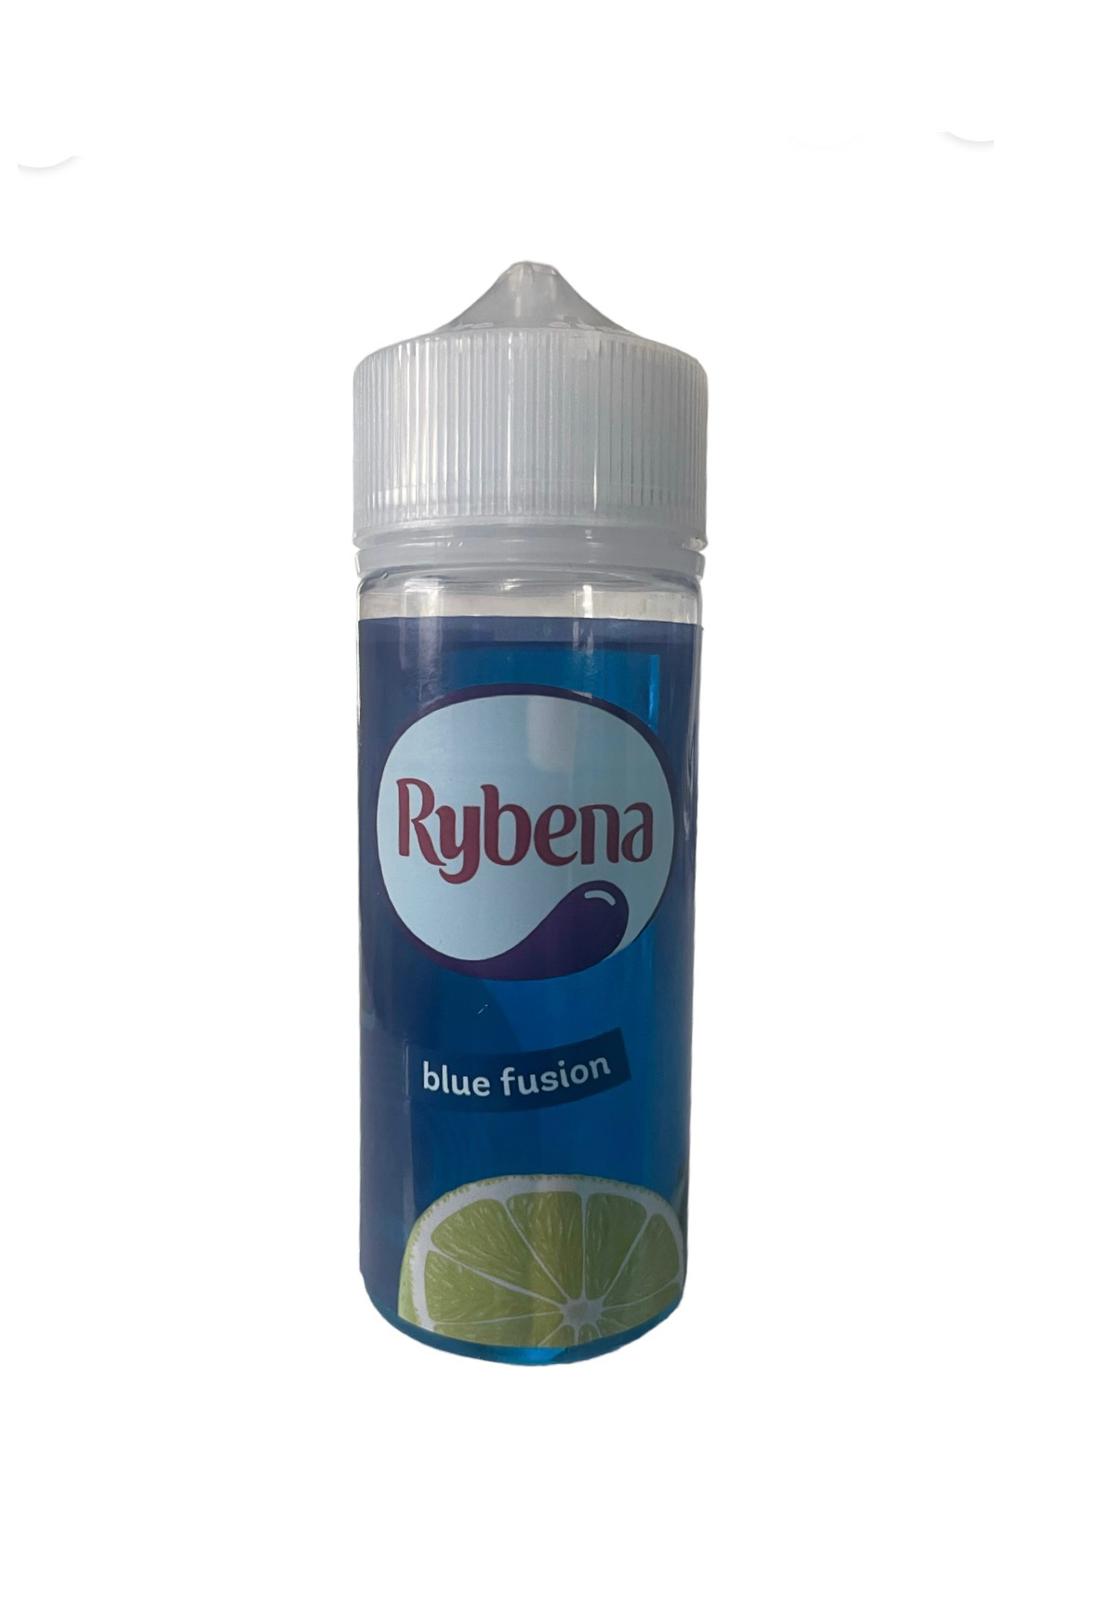 Rybena 100ml E-liquid Shortfill